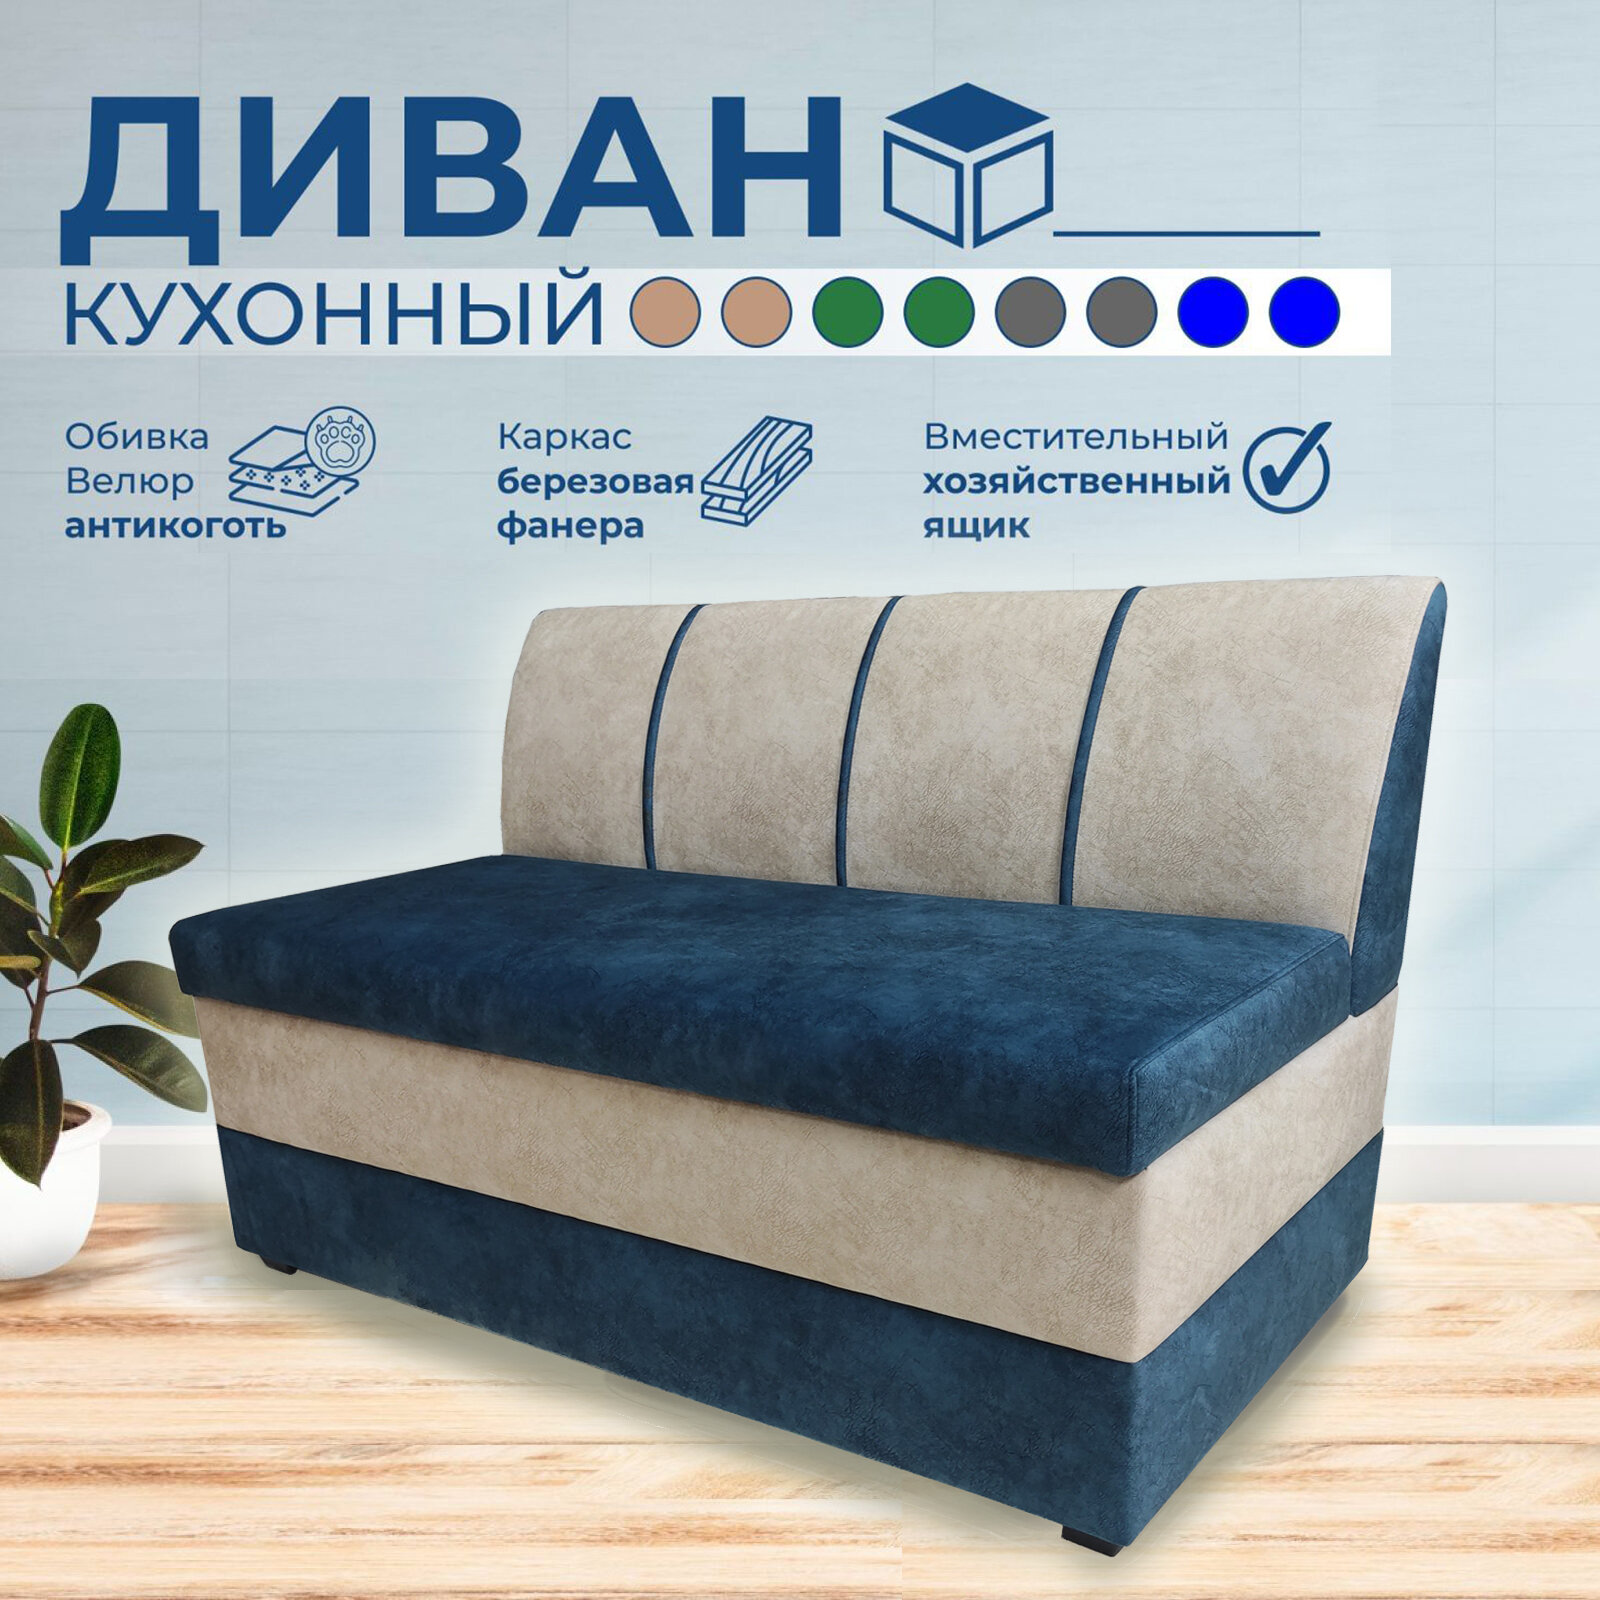 Кухонный диван Форум-8 (140см) Синий